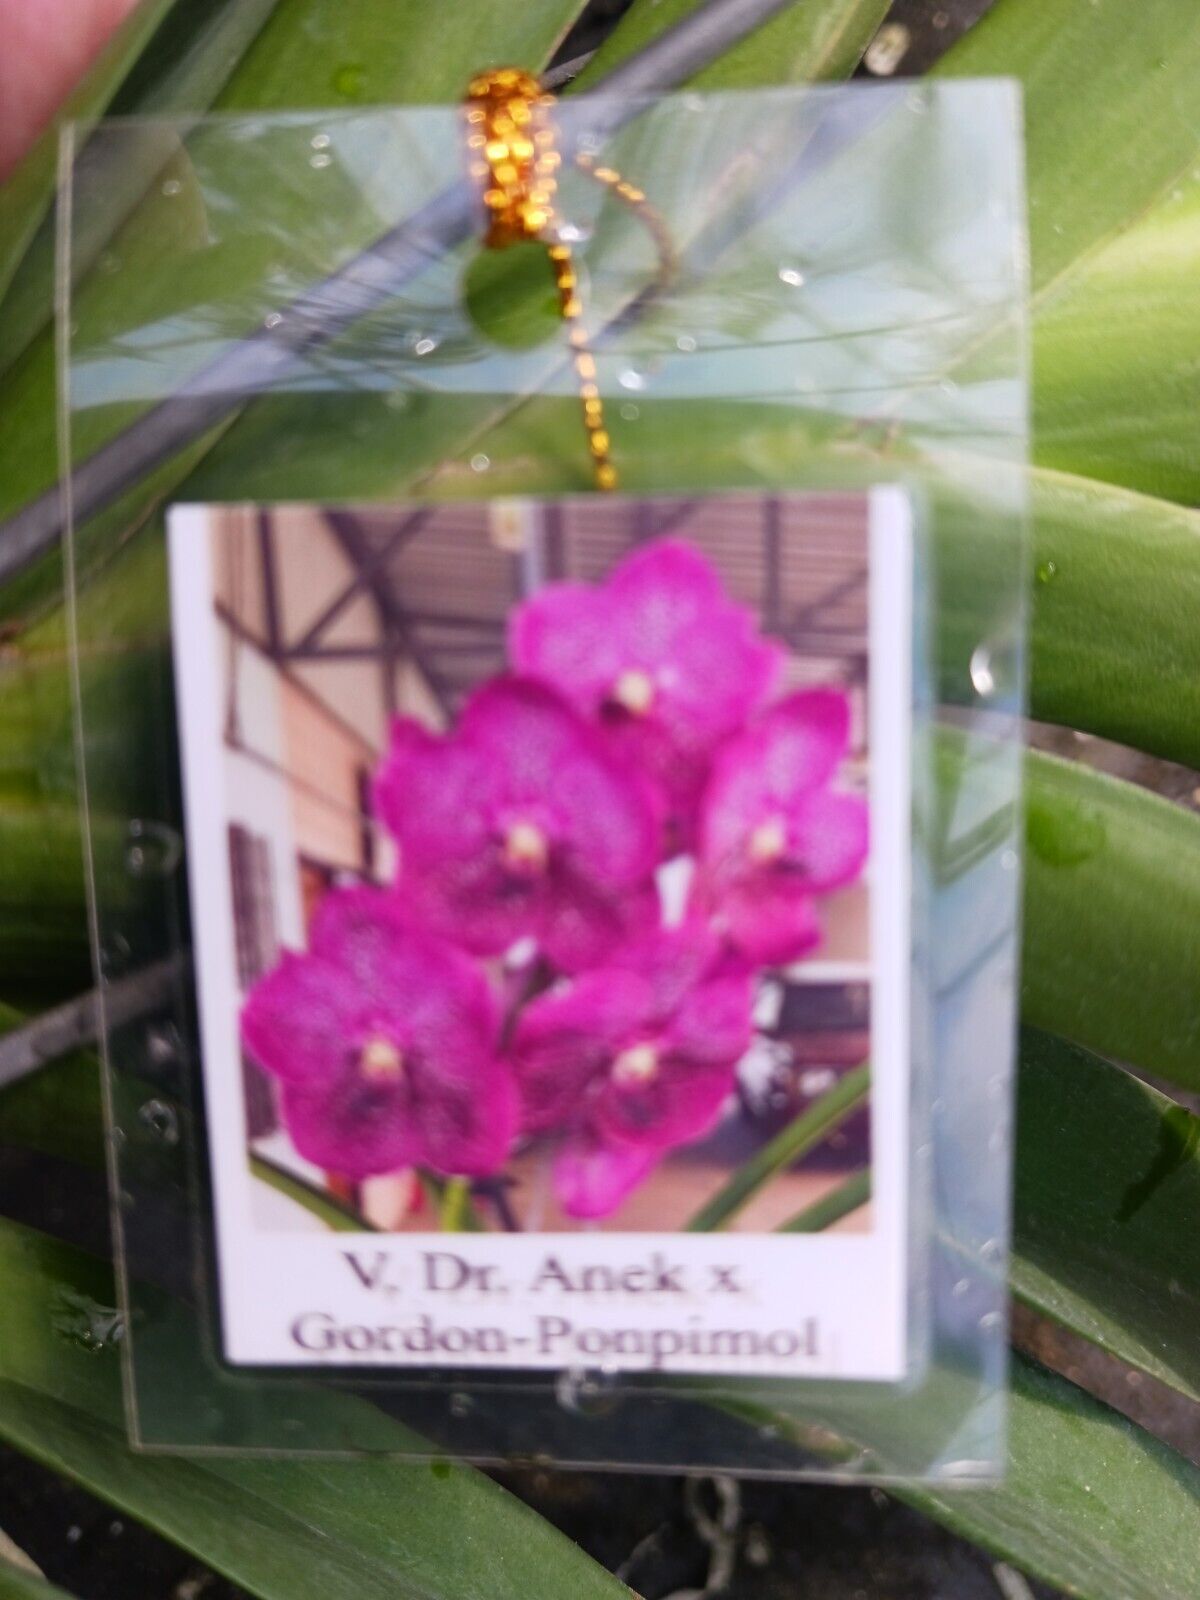 Vanda Dr Anek x Gordon - Ponpimol Orchid